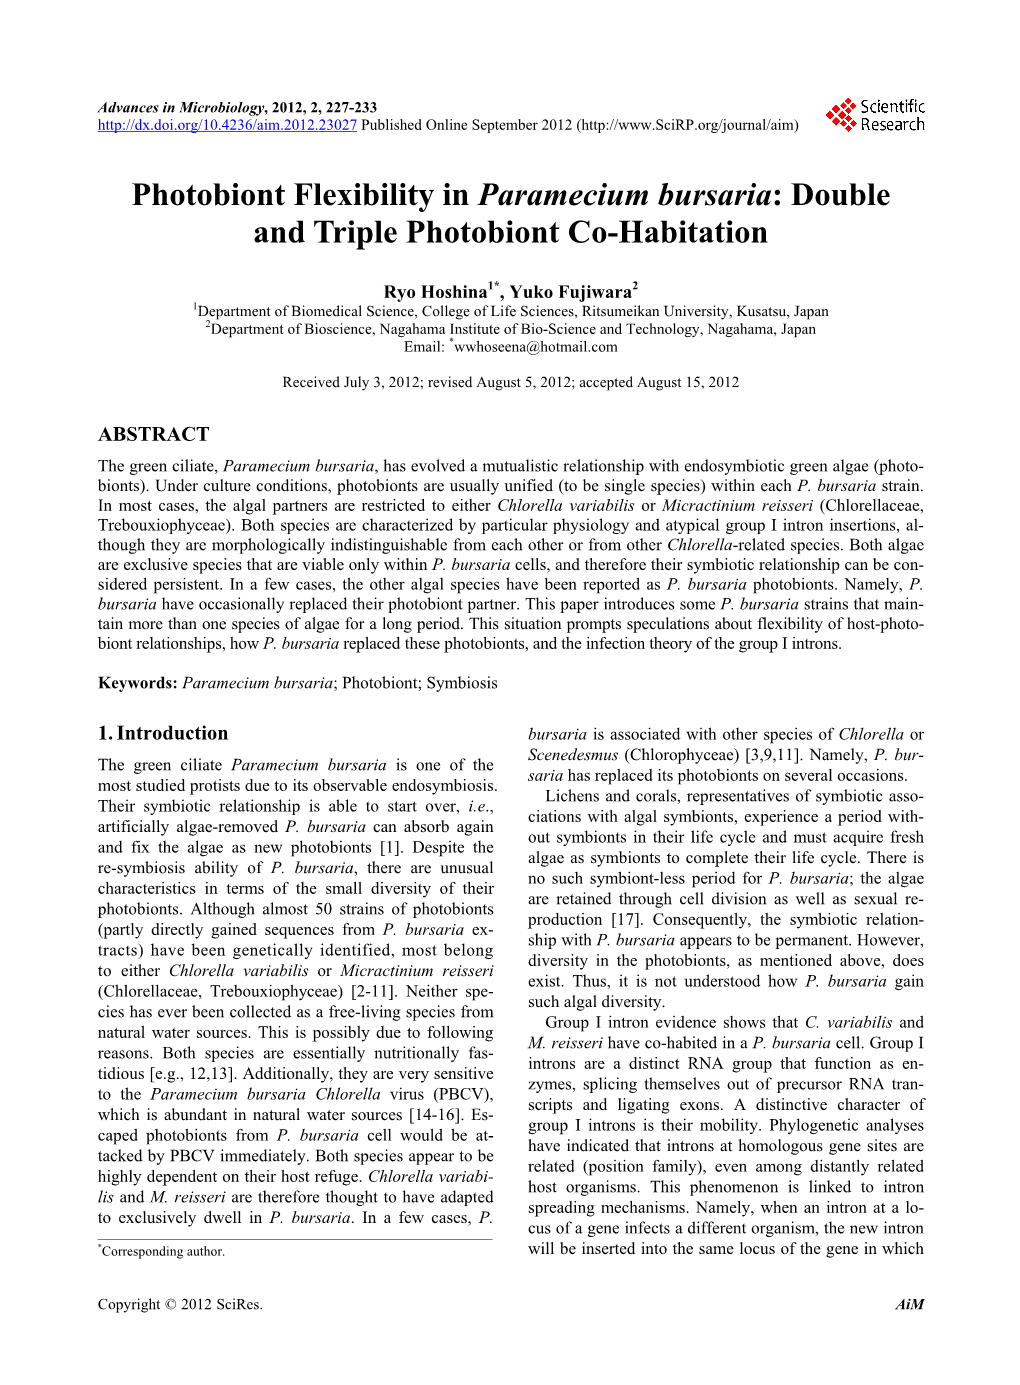 Photobiont Flexibility in Paramecium Bursaria: Double and Triple Photobiont Co-Habitation